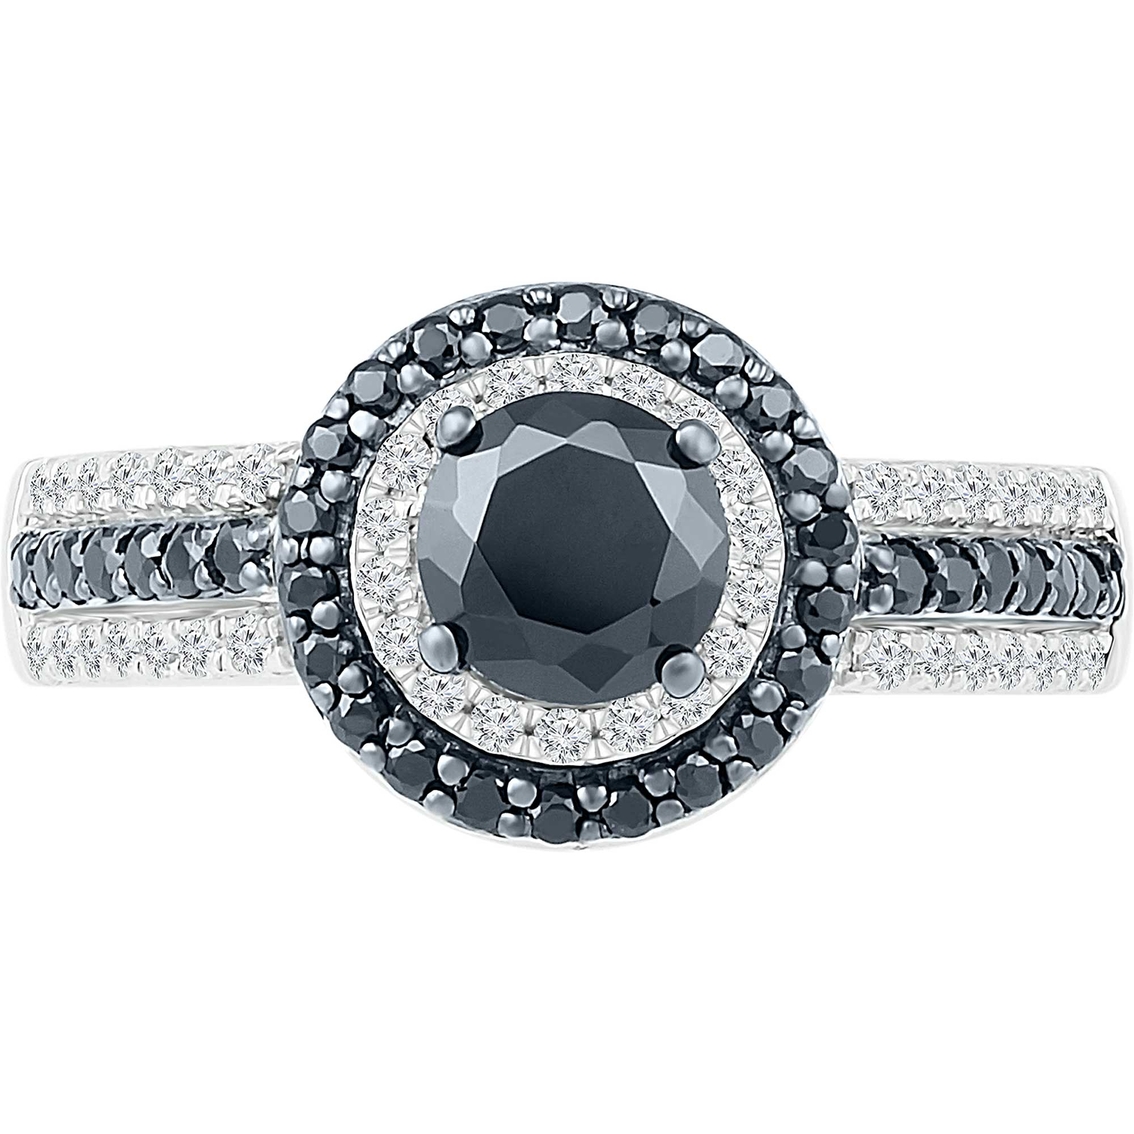 10K White Gold 1 CTW Black and White Diamond Engagement Ring - Image 2 of 2